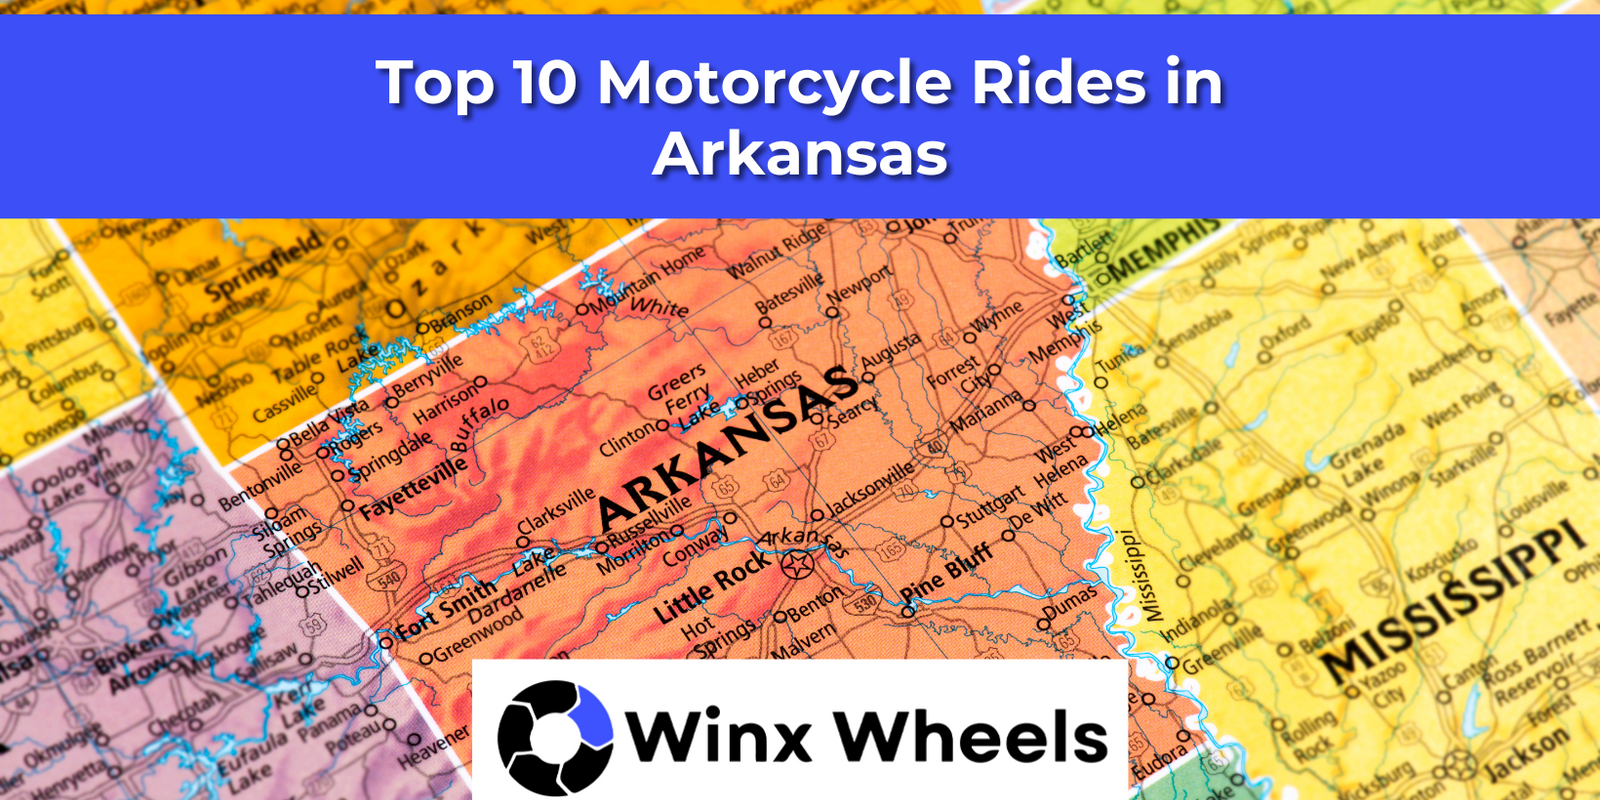 Top 10 Motorcycle Rides in Arkansas